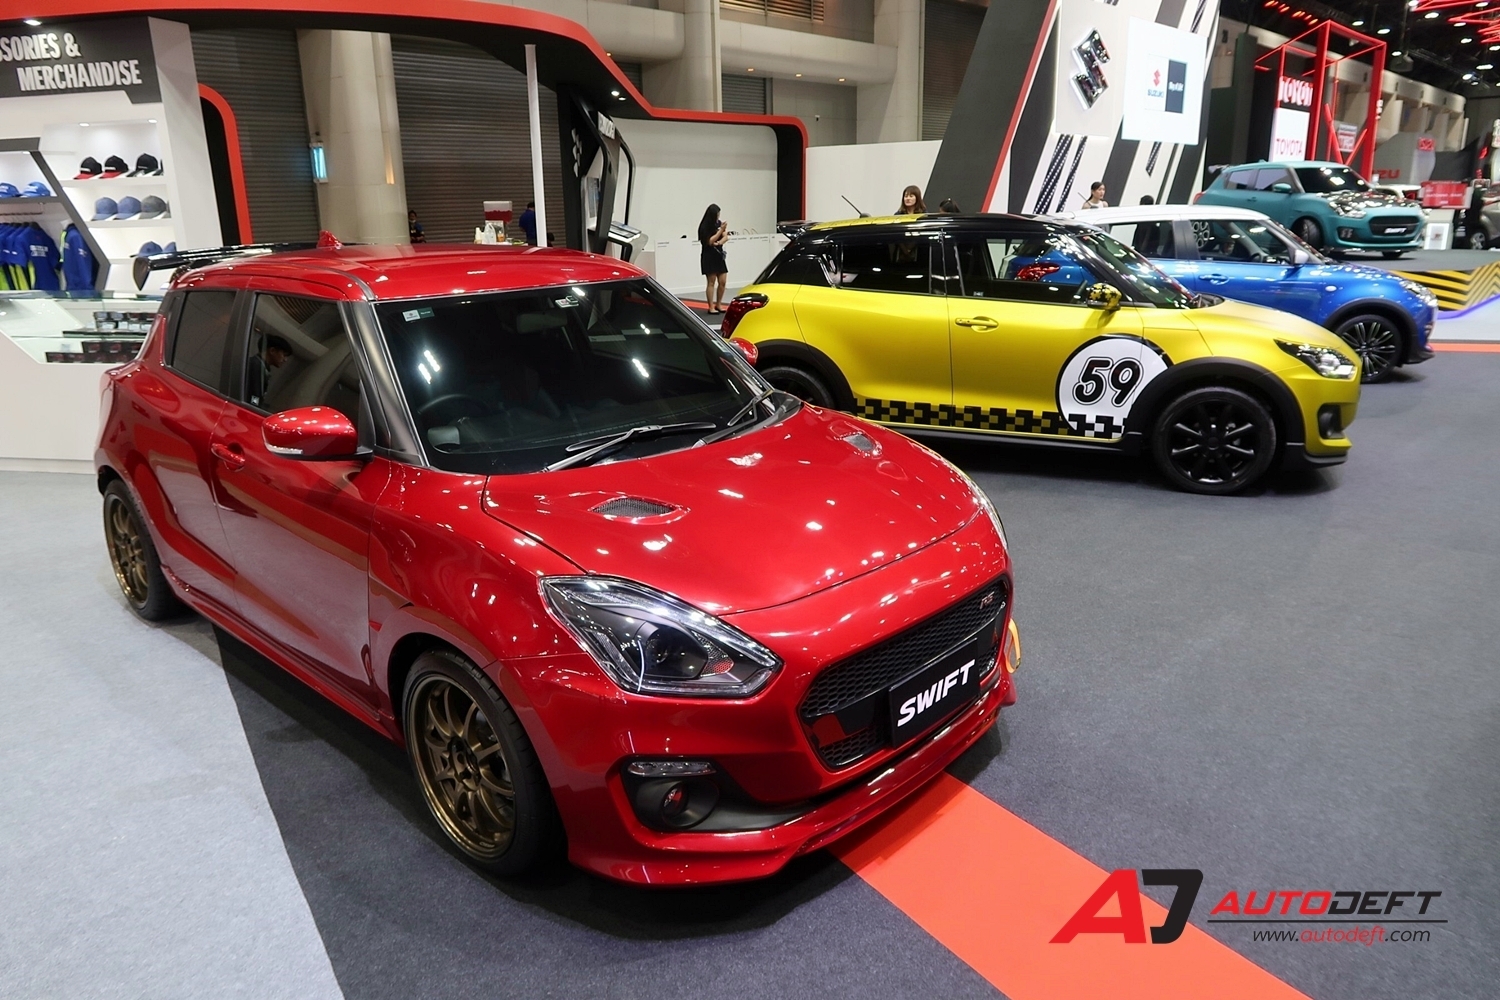 Suzuki at Bangkok International Auto Salon 2018